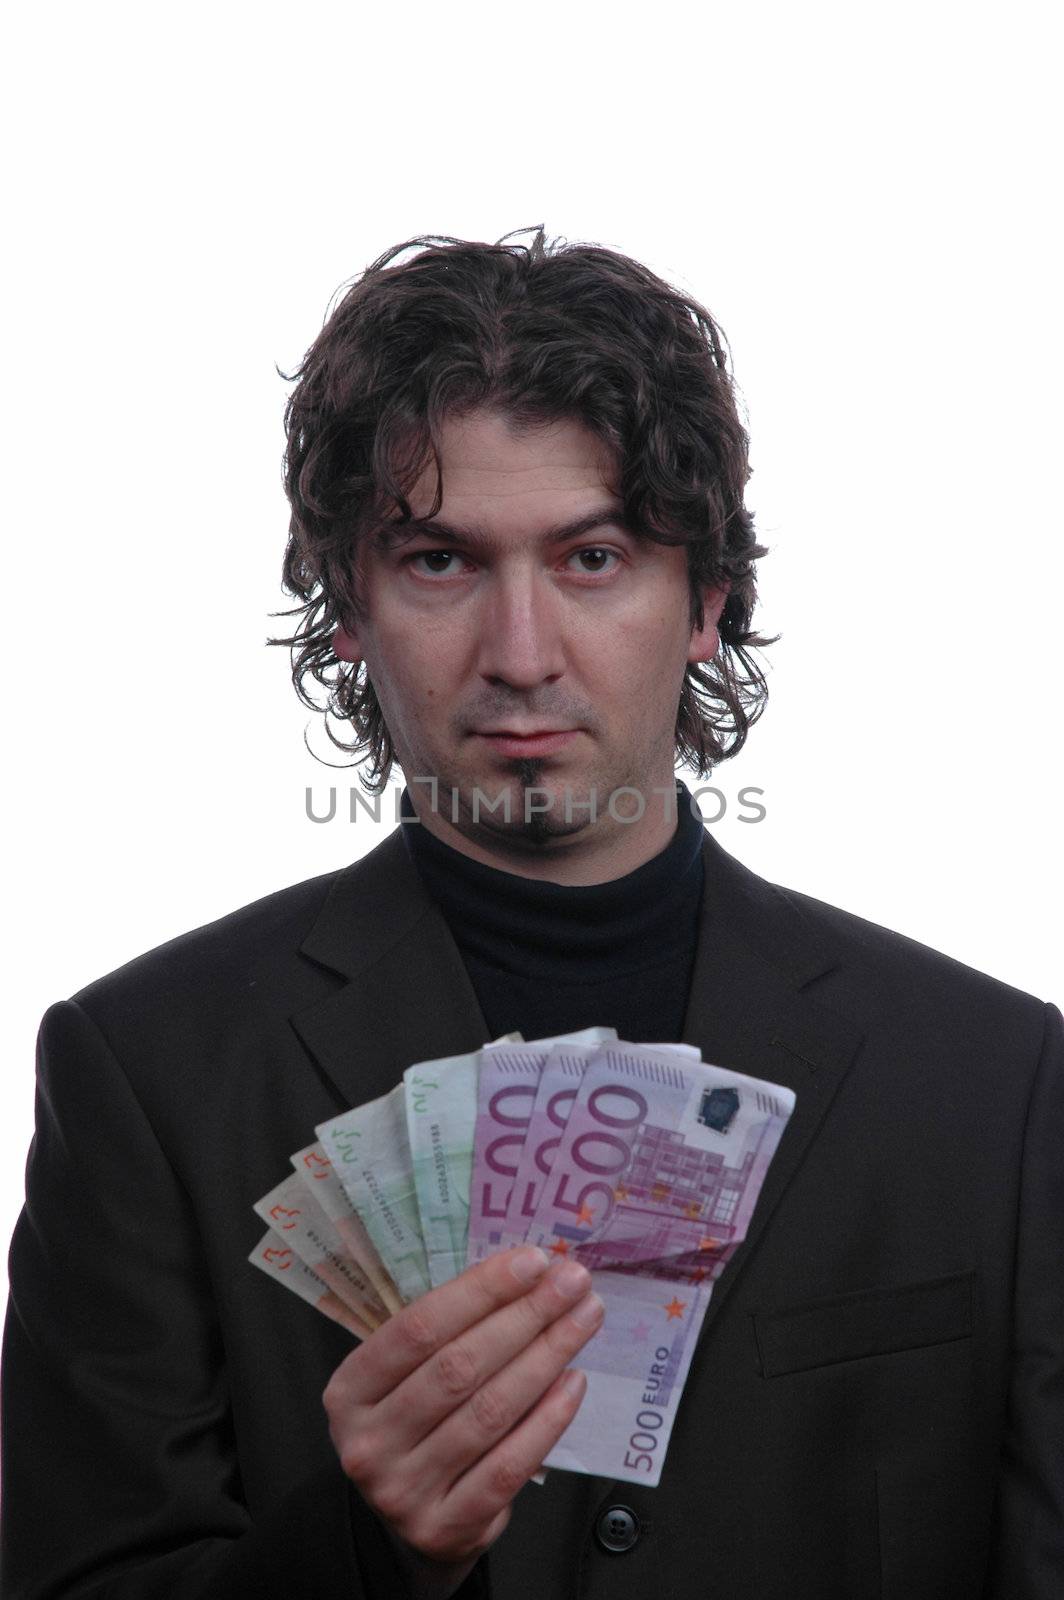 Business man holding money isolated on white